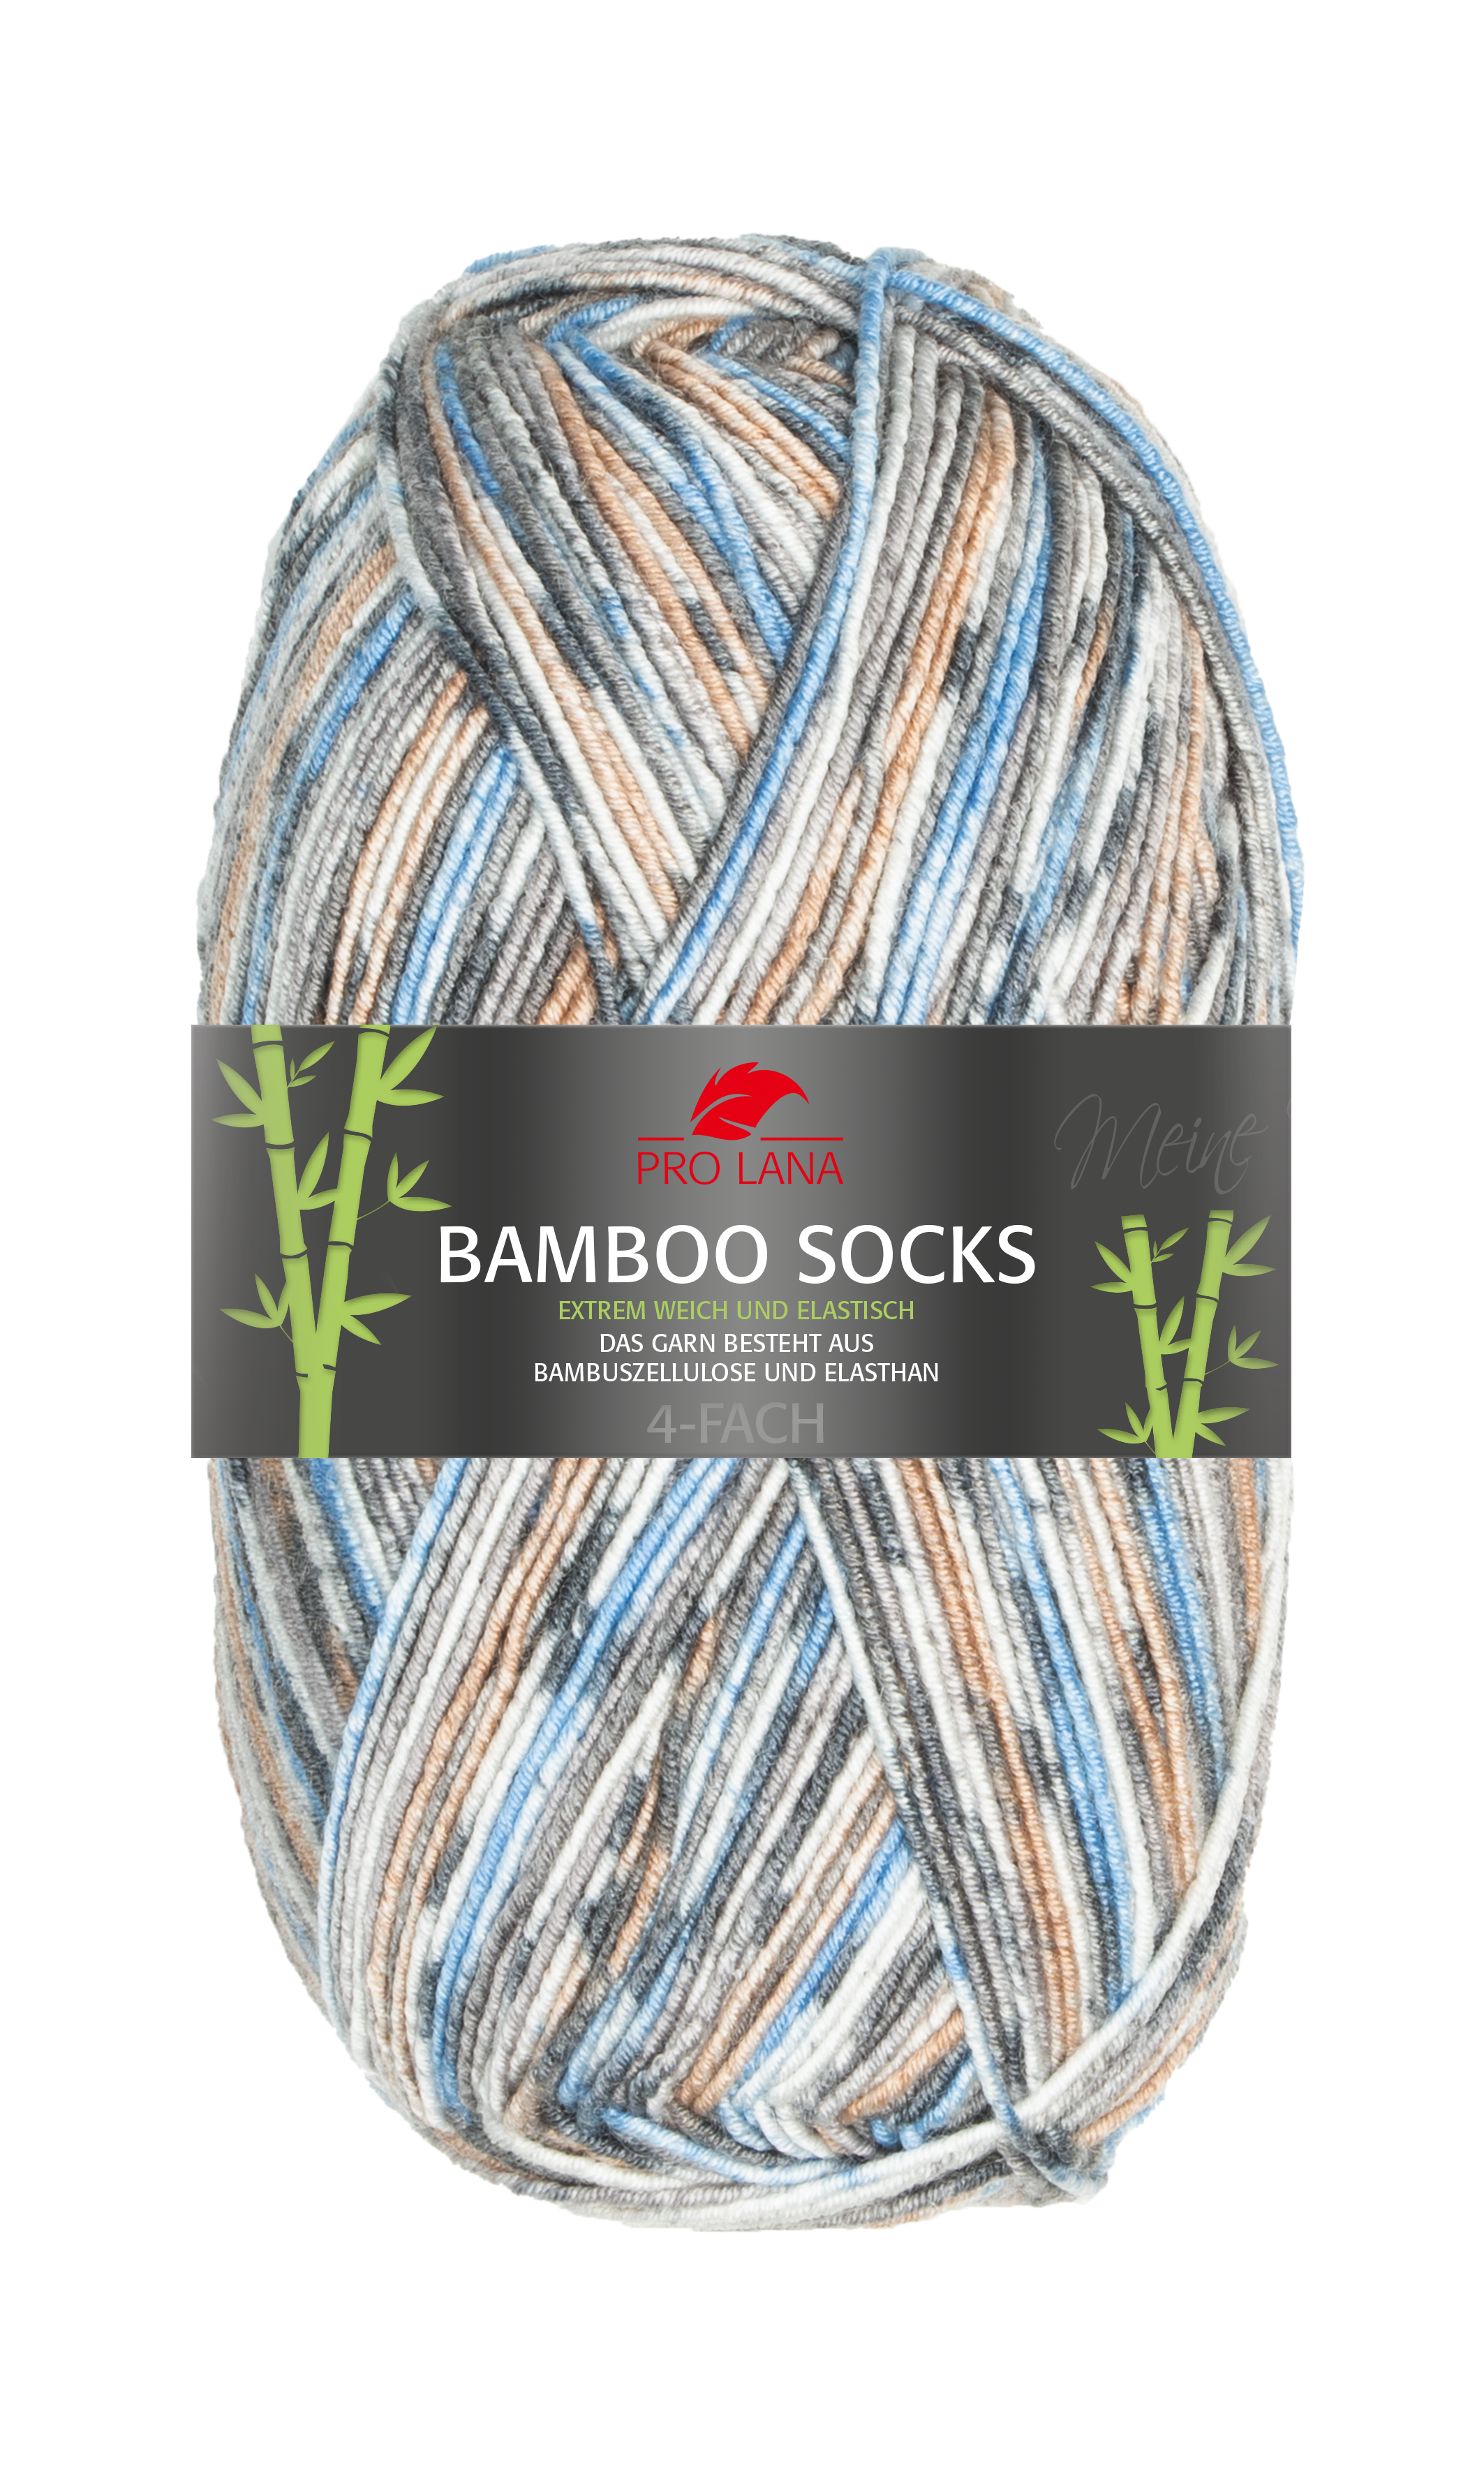 Bamboo Socks blau/braun/grau meliert 